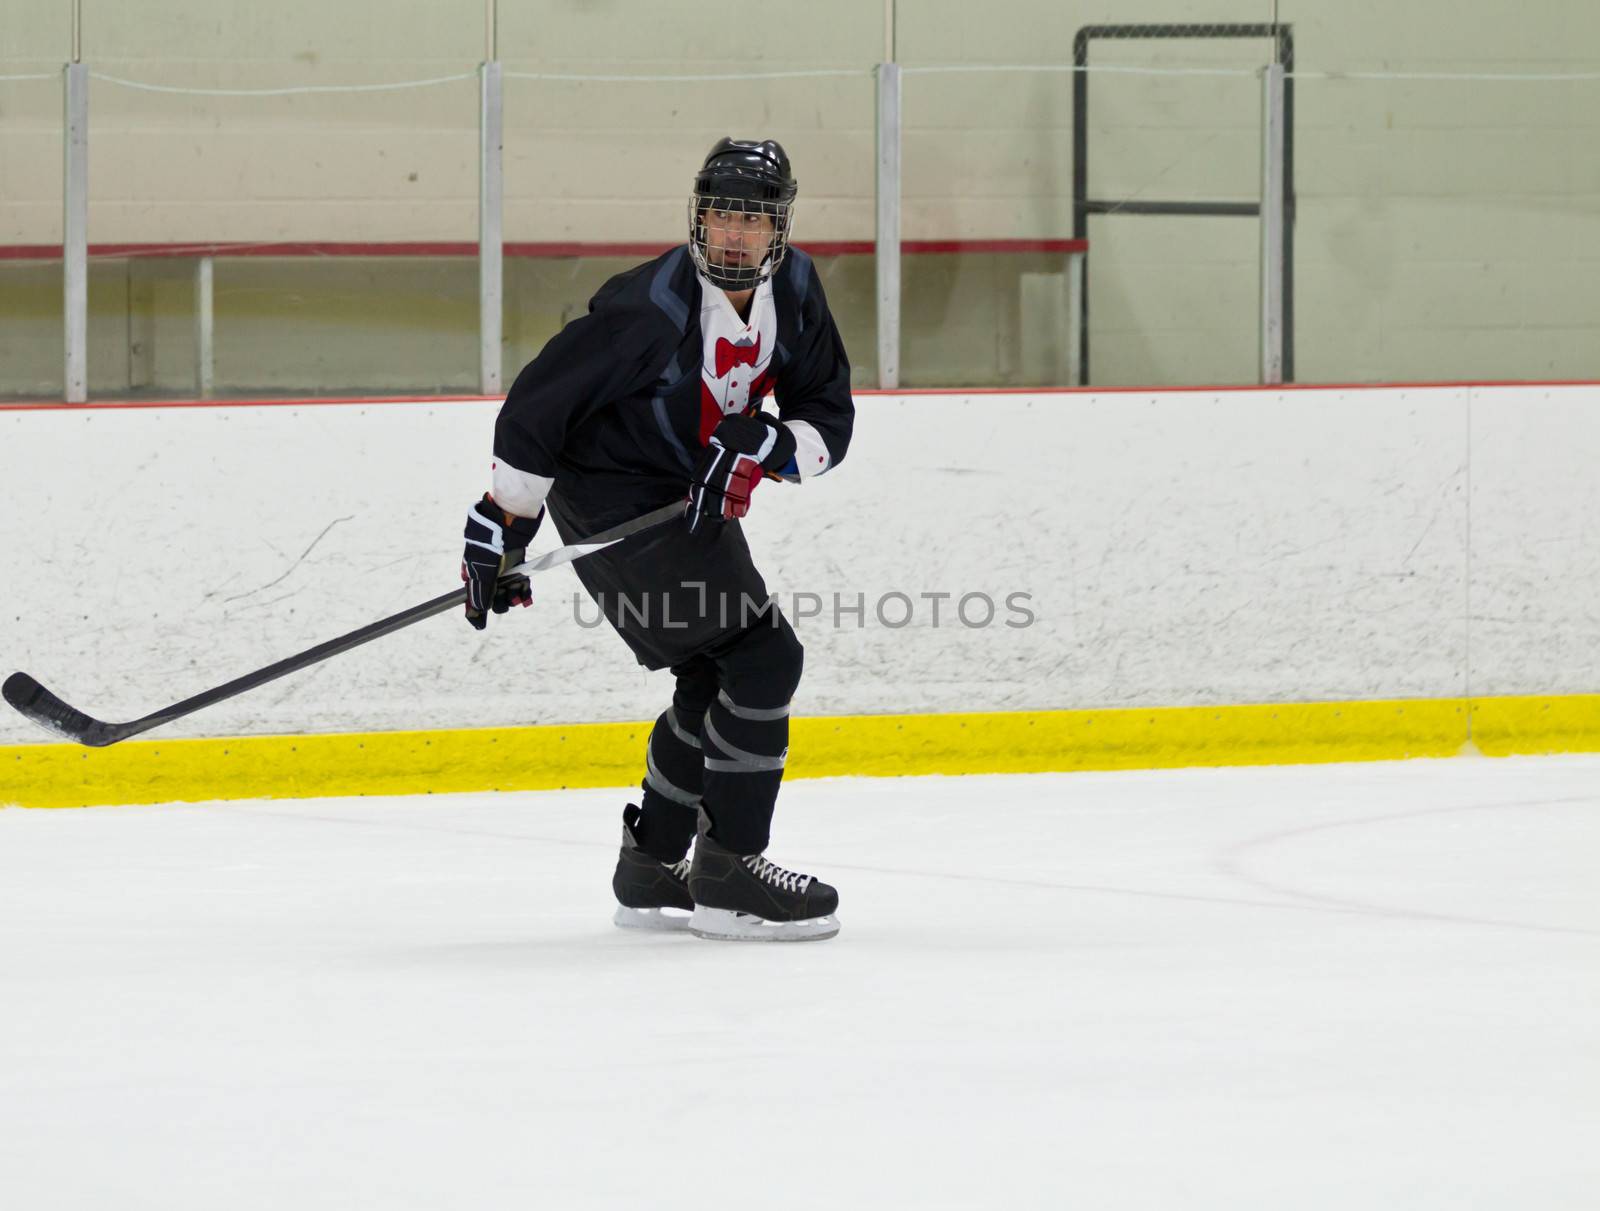 Male playing ice hockey by bigjohn36